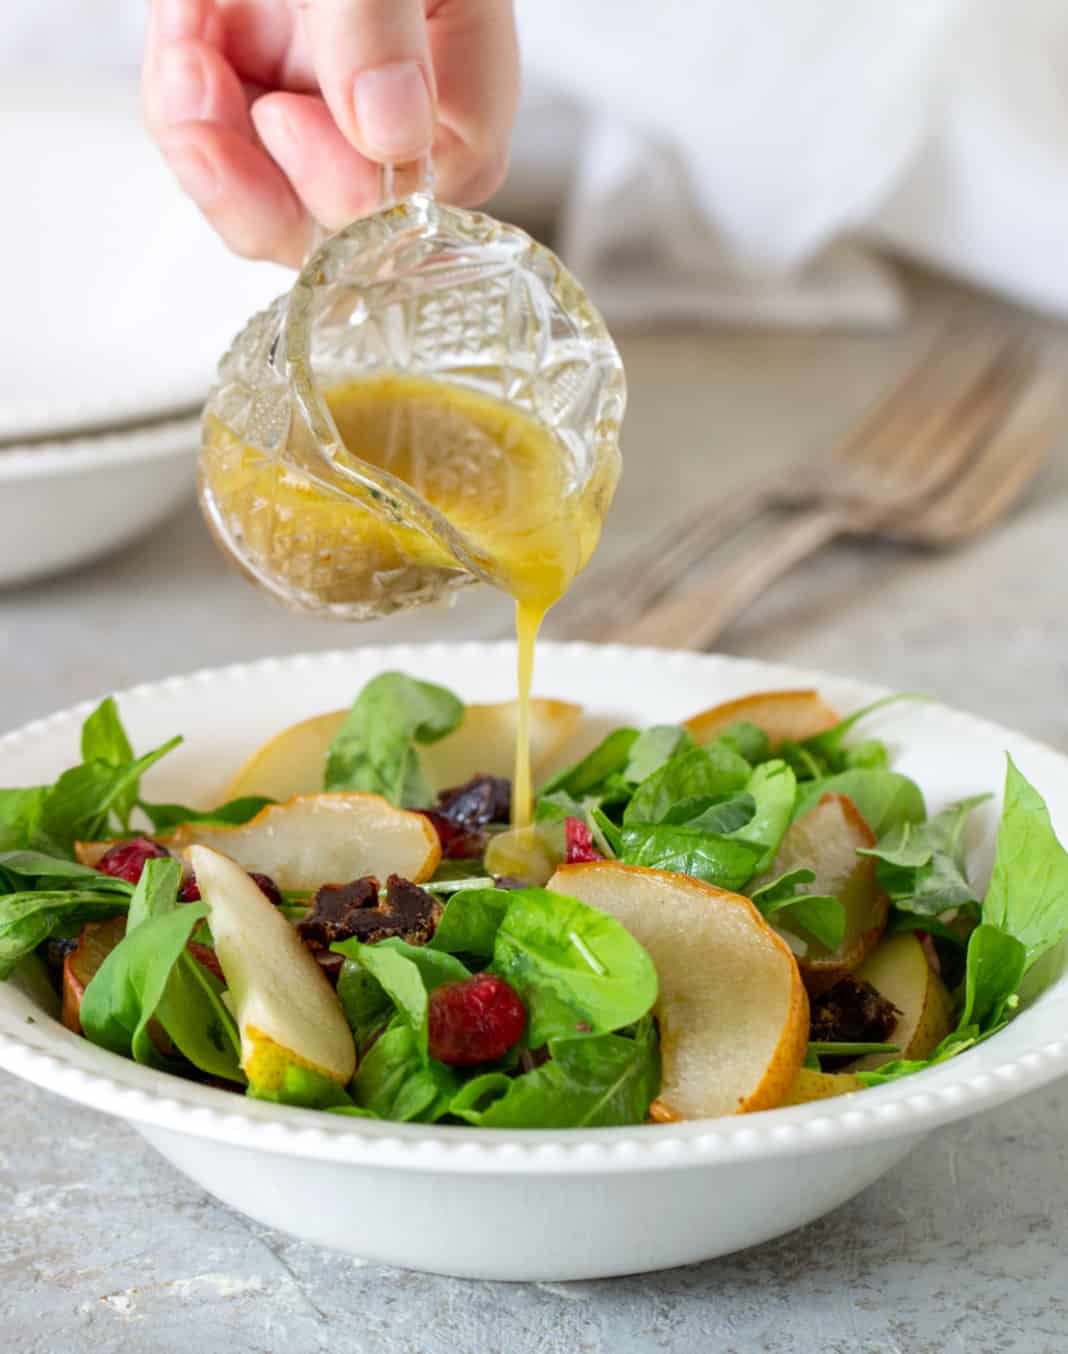 Pouring vinaigrette over pear arugula salad on white bowl plate.